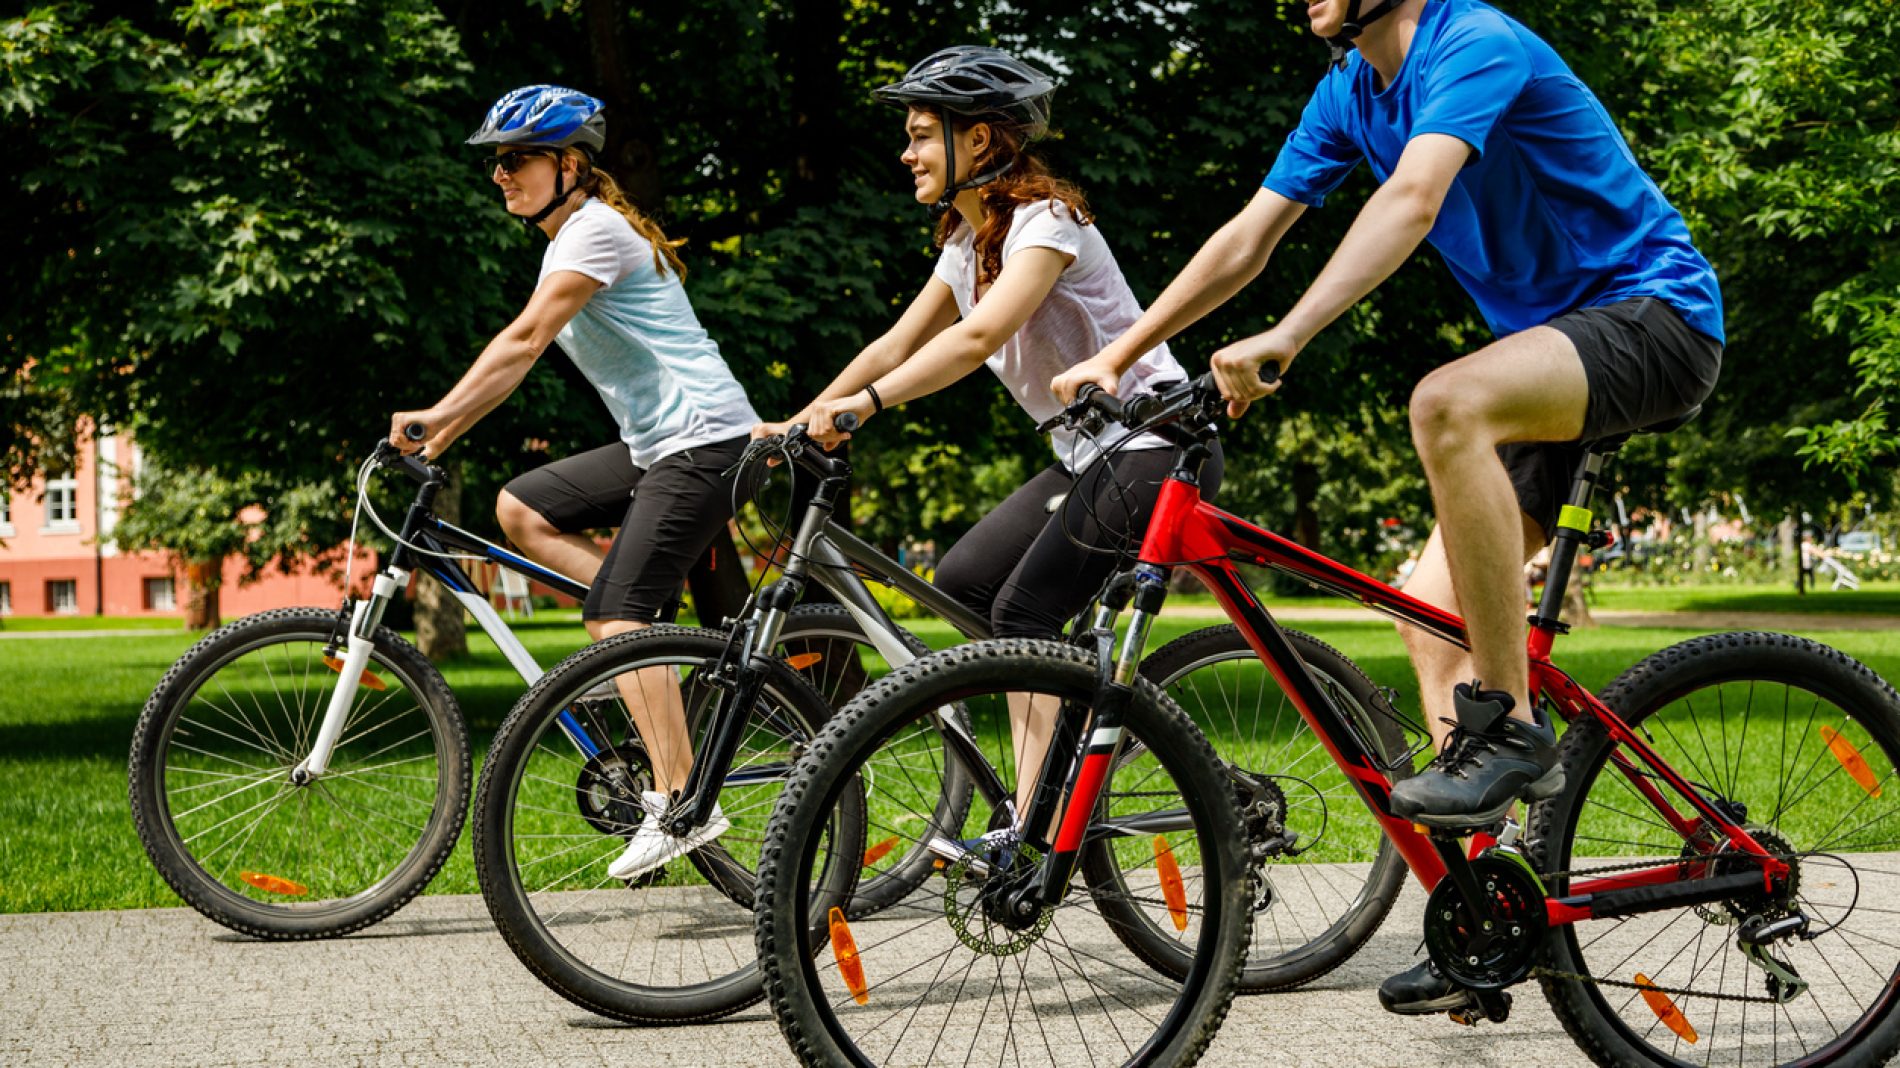 Urban biking- three people riding bikes in city